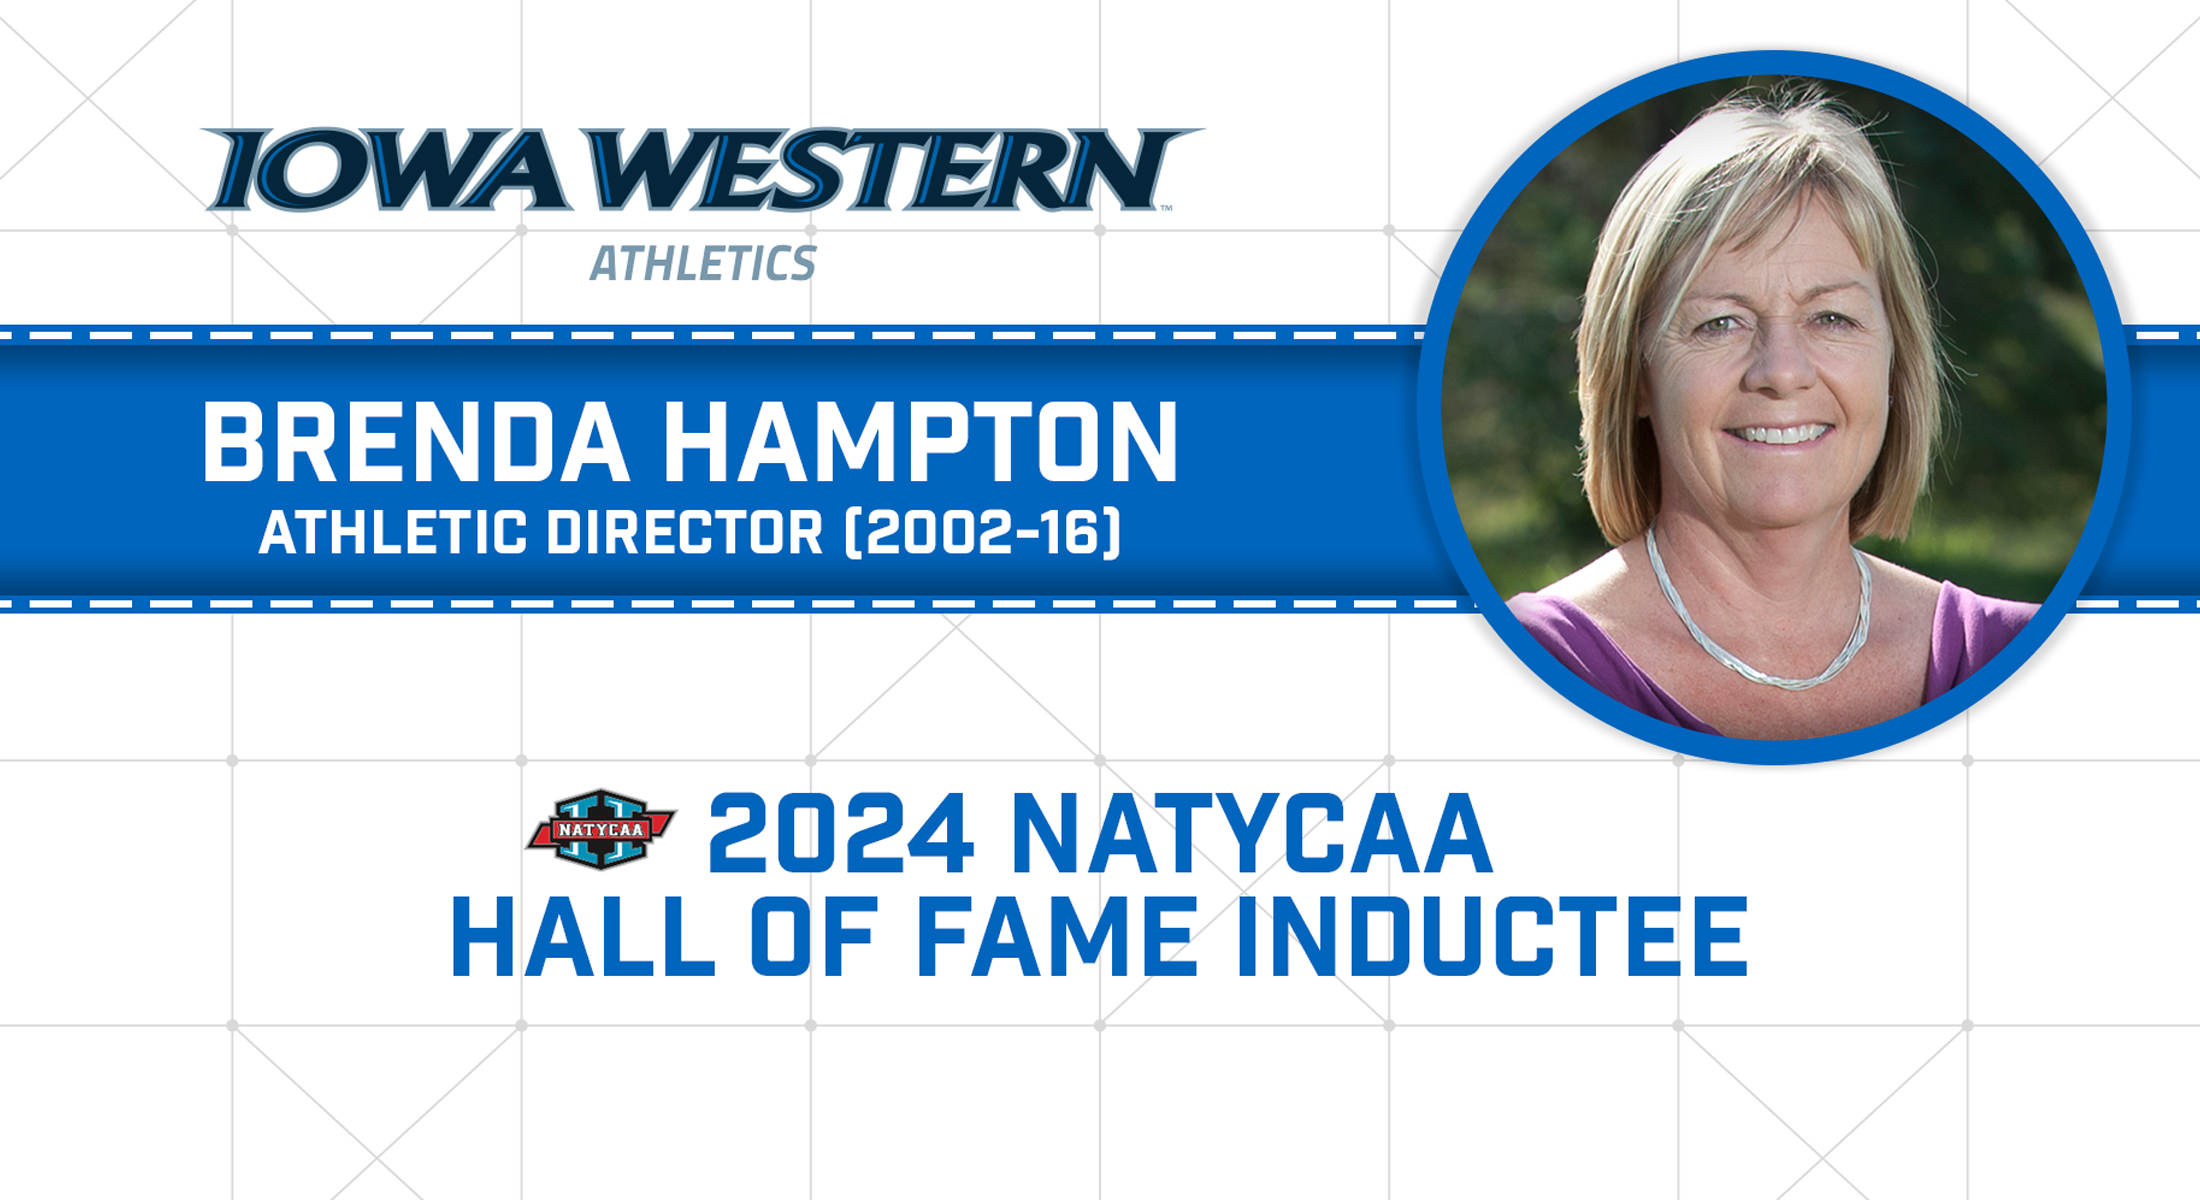 NATYCAA Inducts Brenda Hampton into Hall of Fame